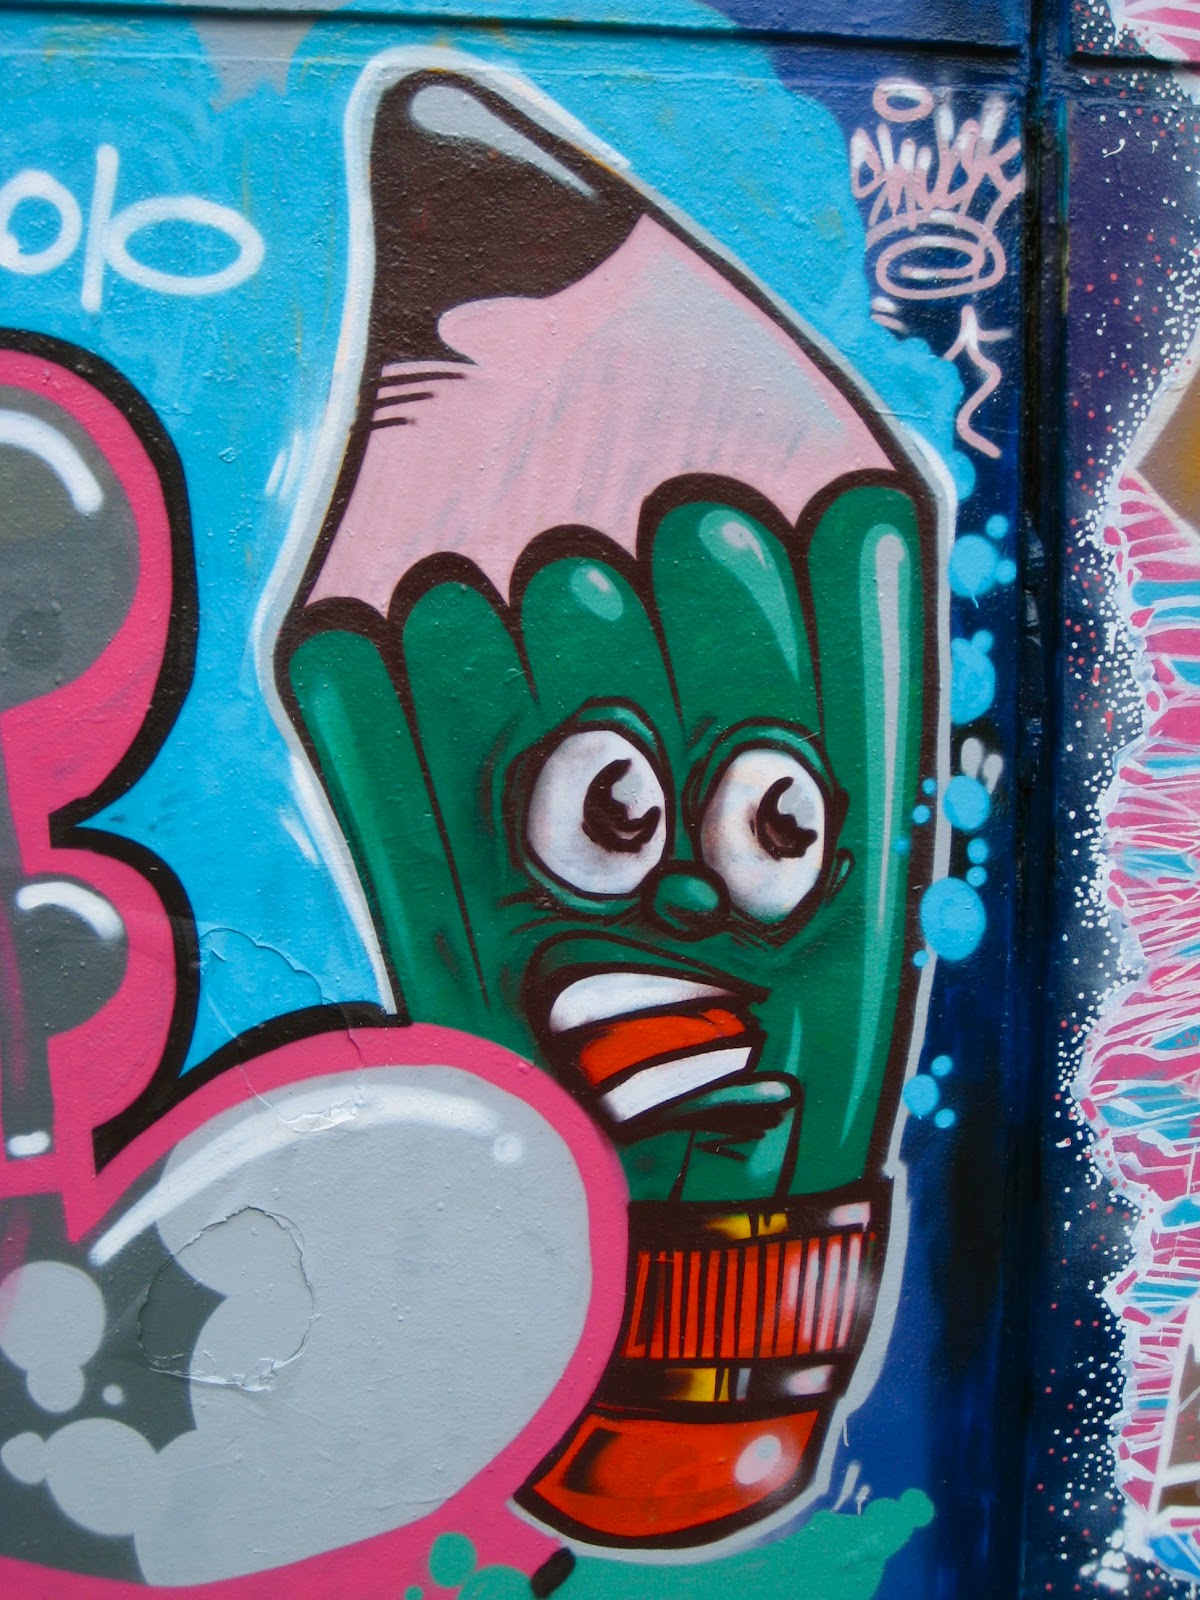 The Kool Skool: Shucks One Graffiti Characters 2010